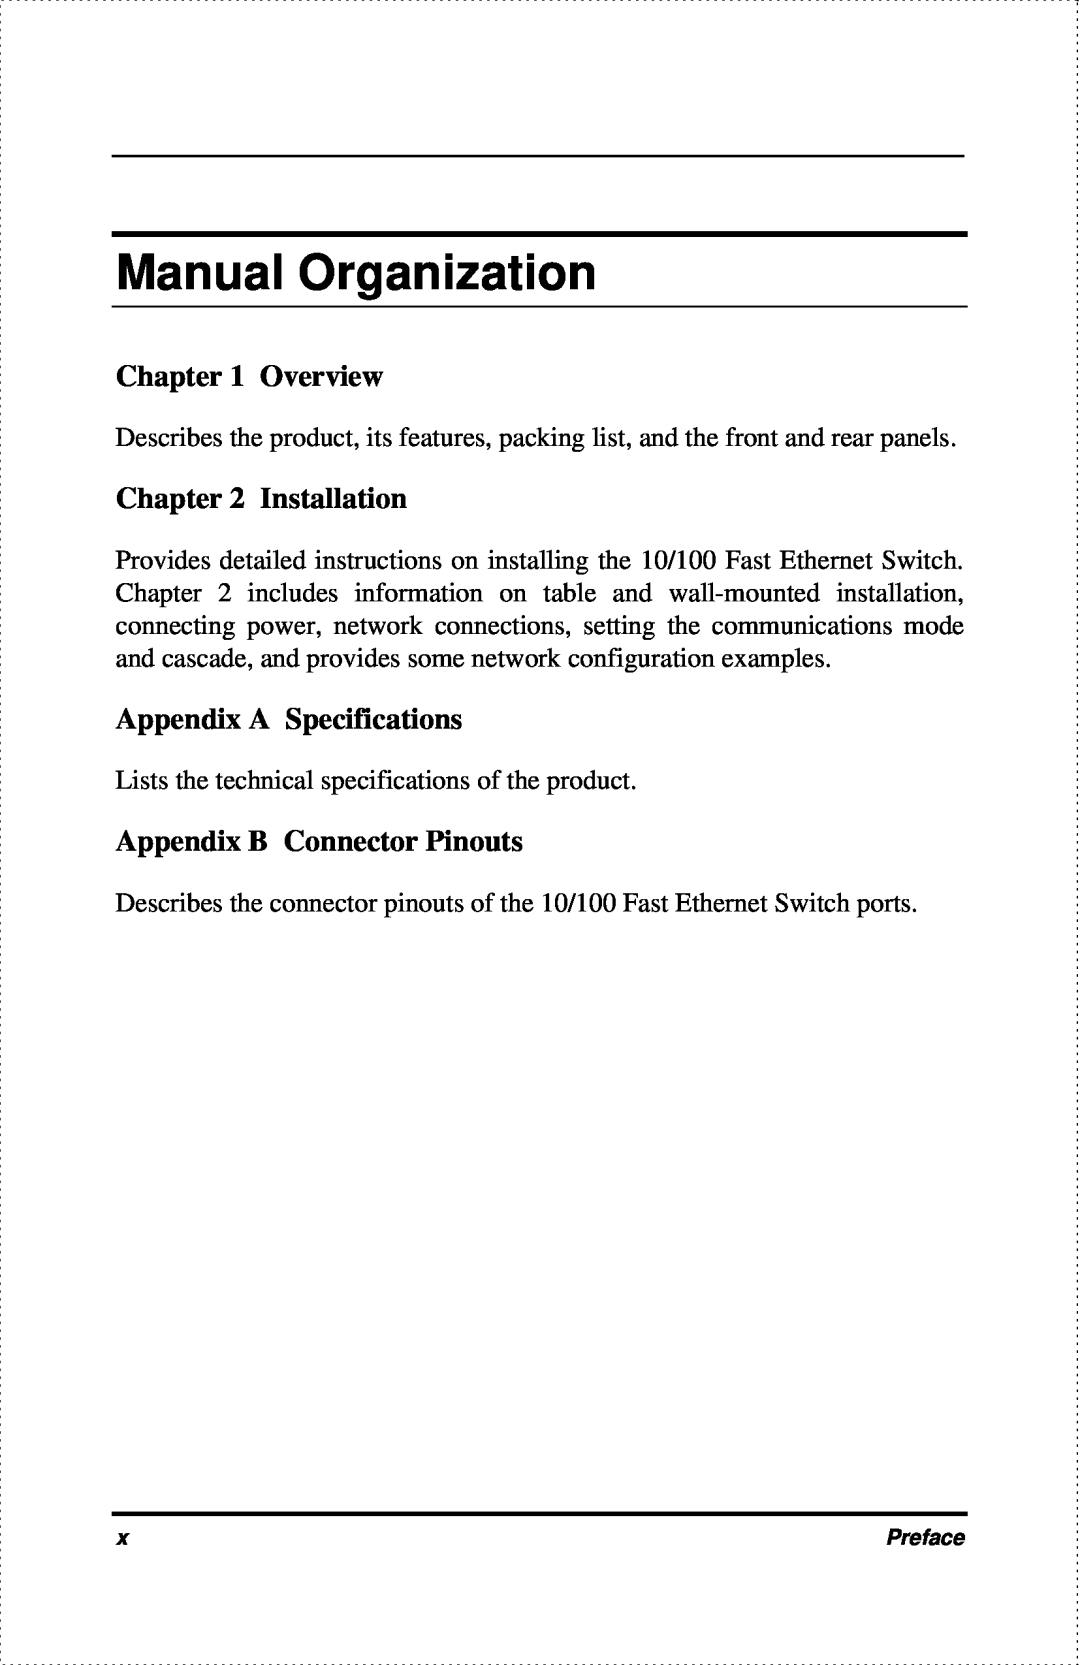 D-Link DES-802 manual Manual Organization, Overview, Installation, Appendix A Specifications, Appendix B Connector Pinouts 